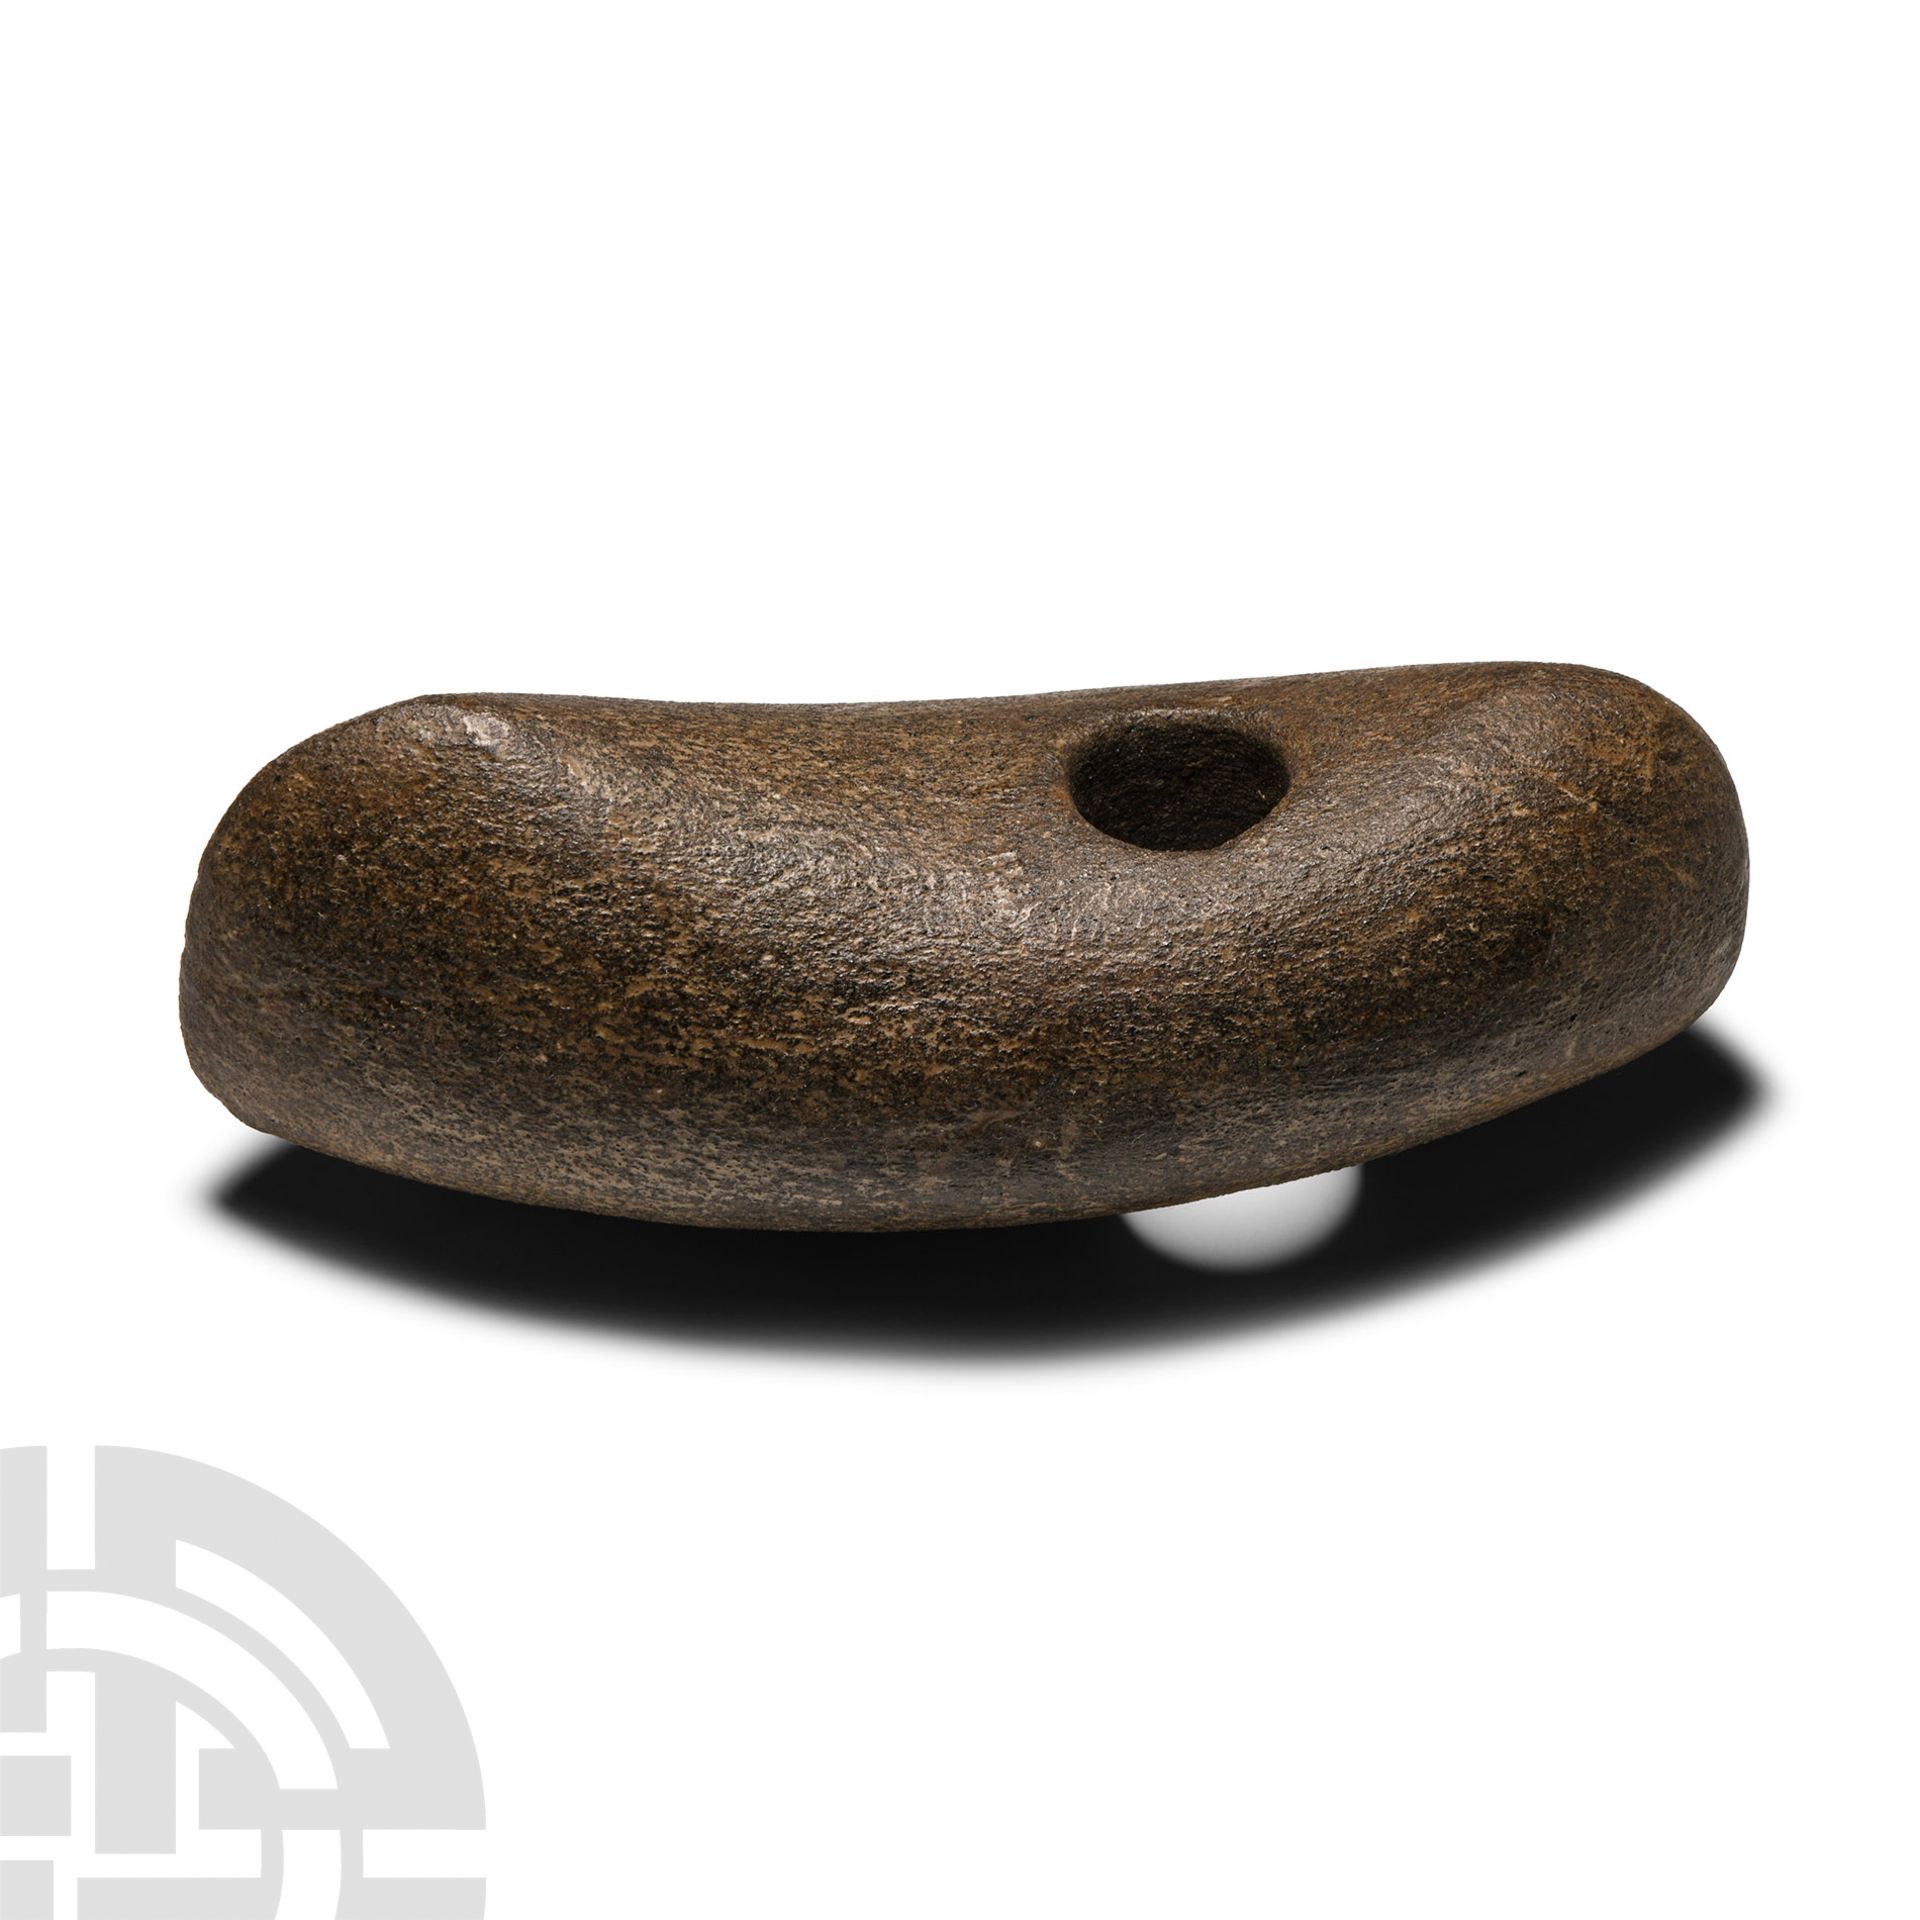 Stone Age Pierced Boat-Shaped Axehead